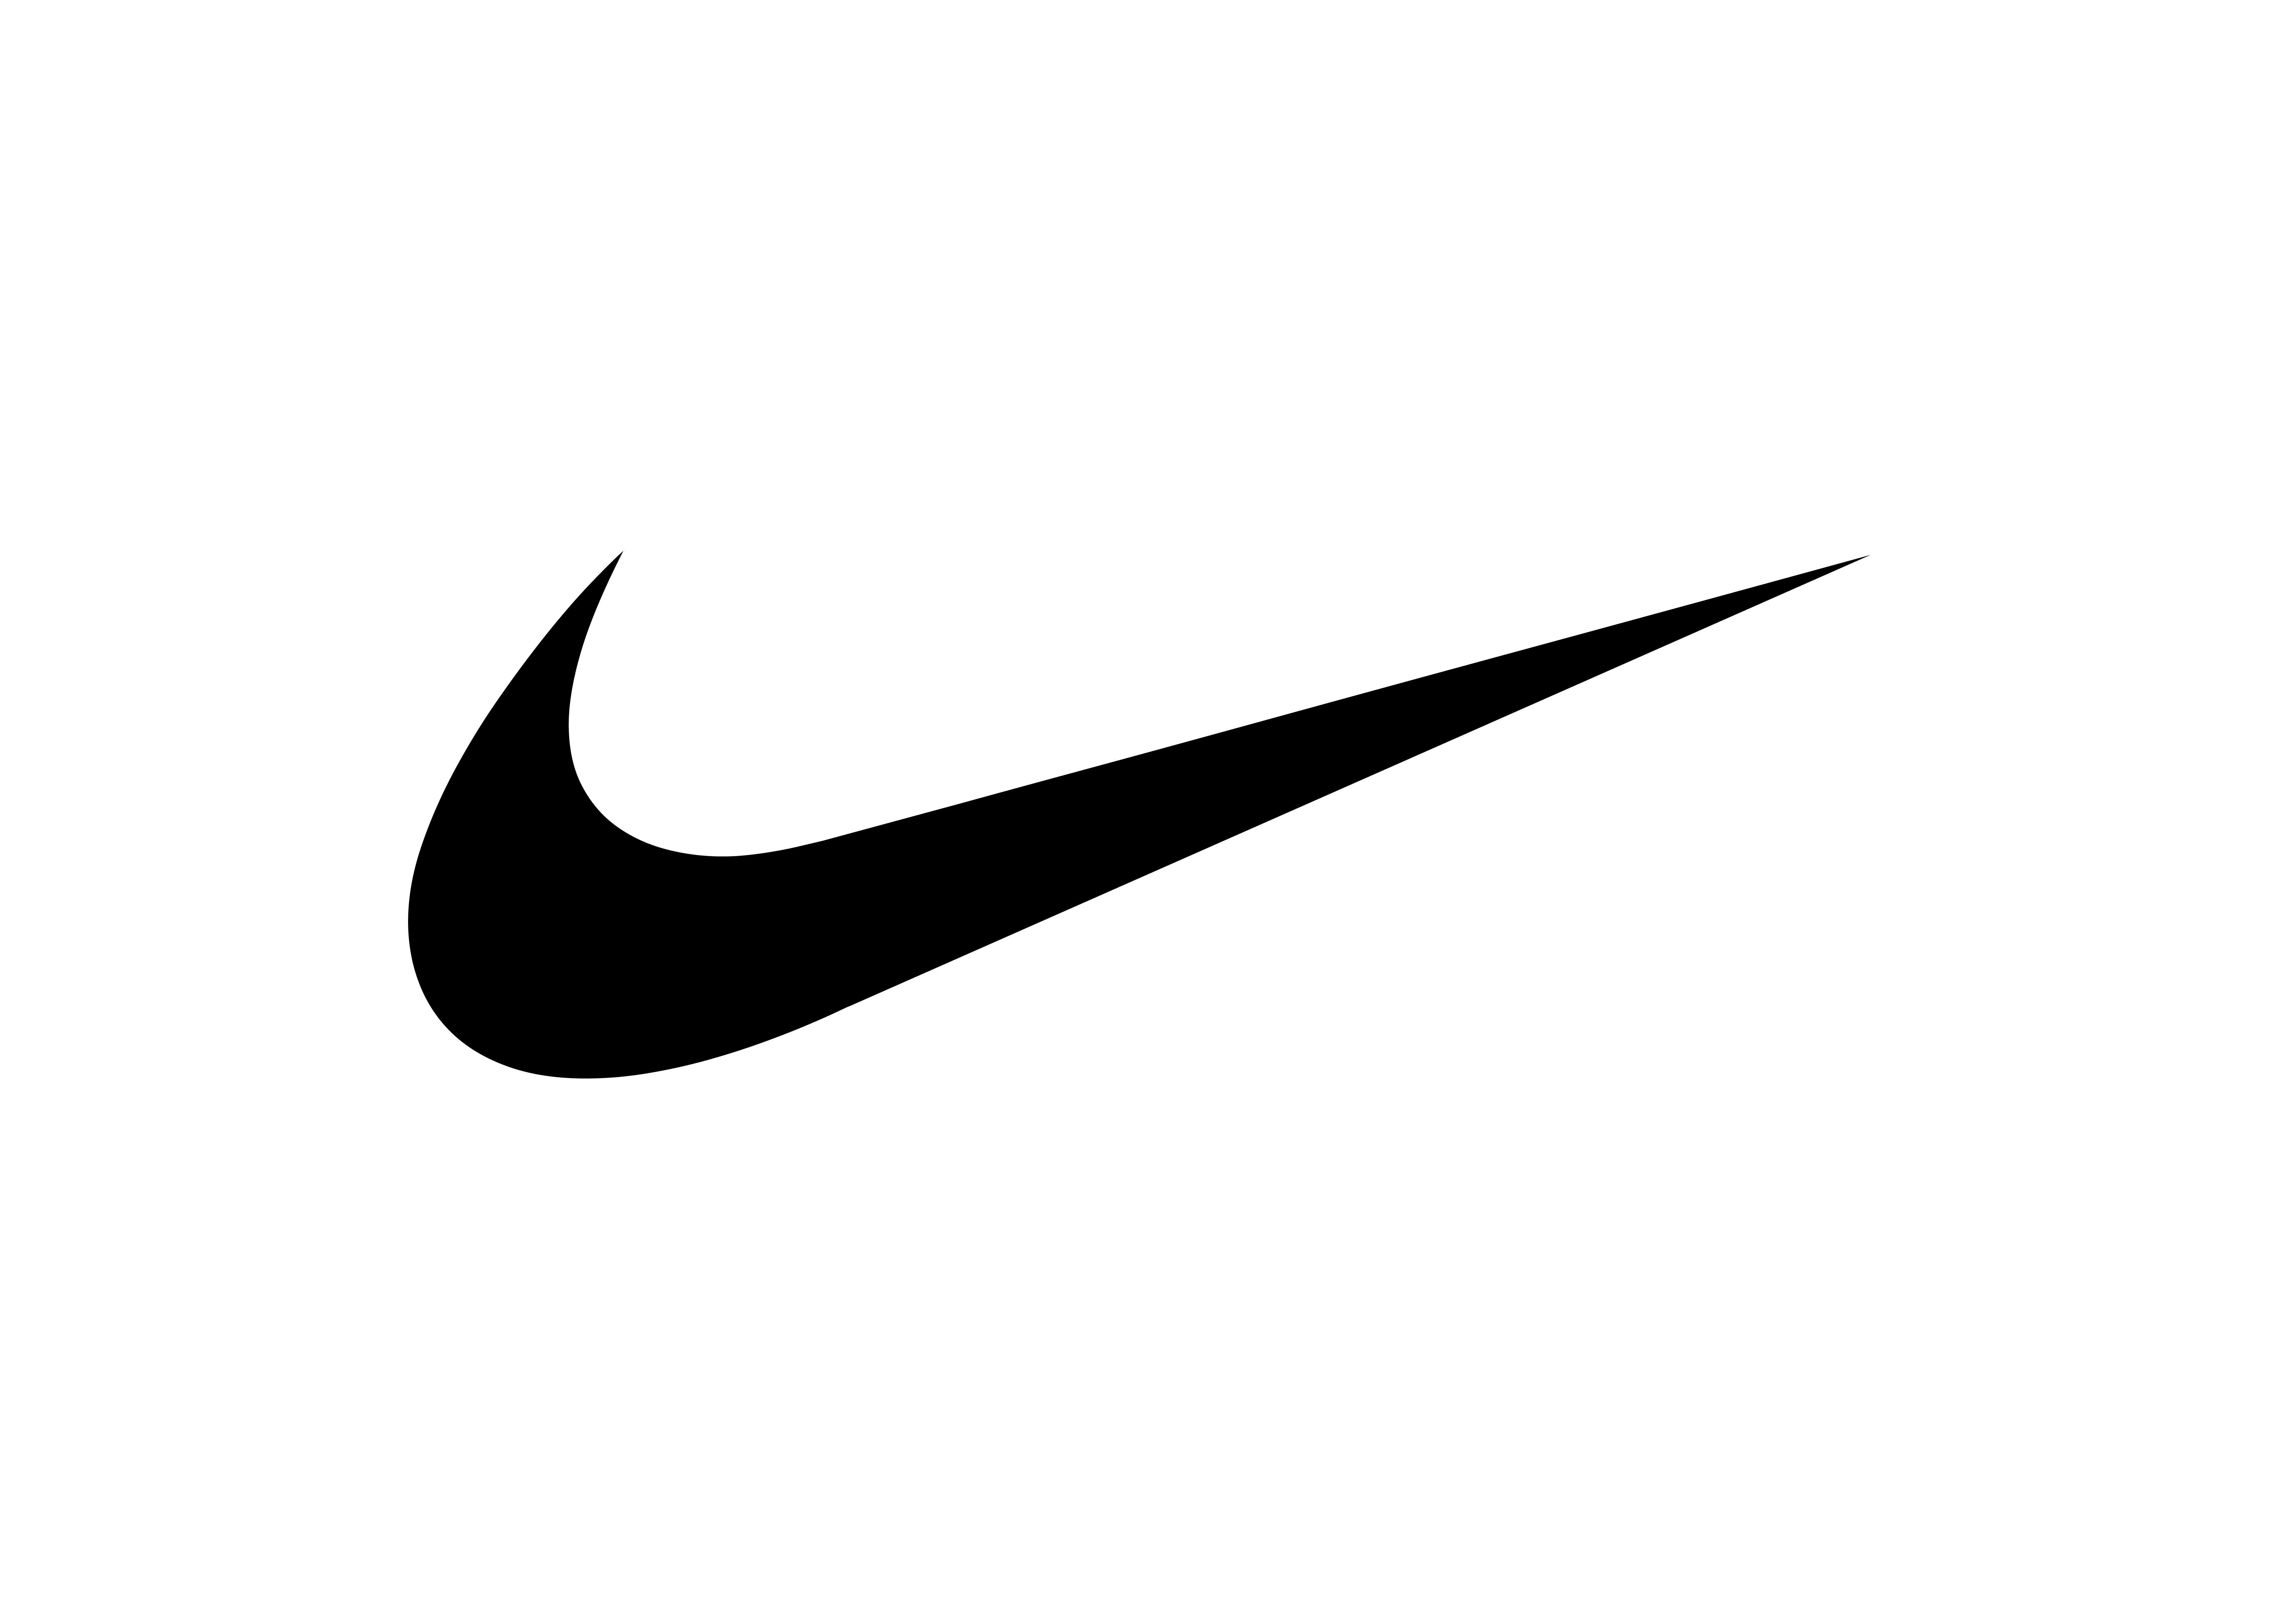 Black Swoosh Logo - Pin by tennisvine.com on Tennis - Logos | Nike logo, Nike, Logos